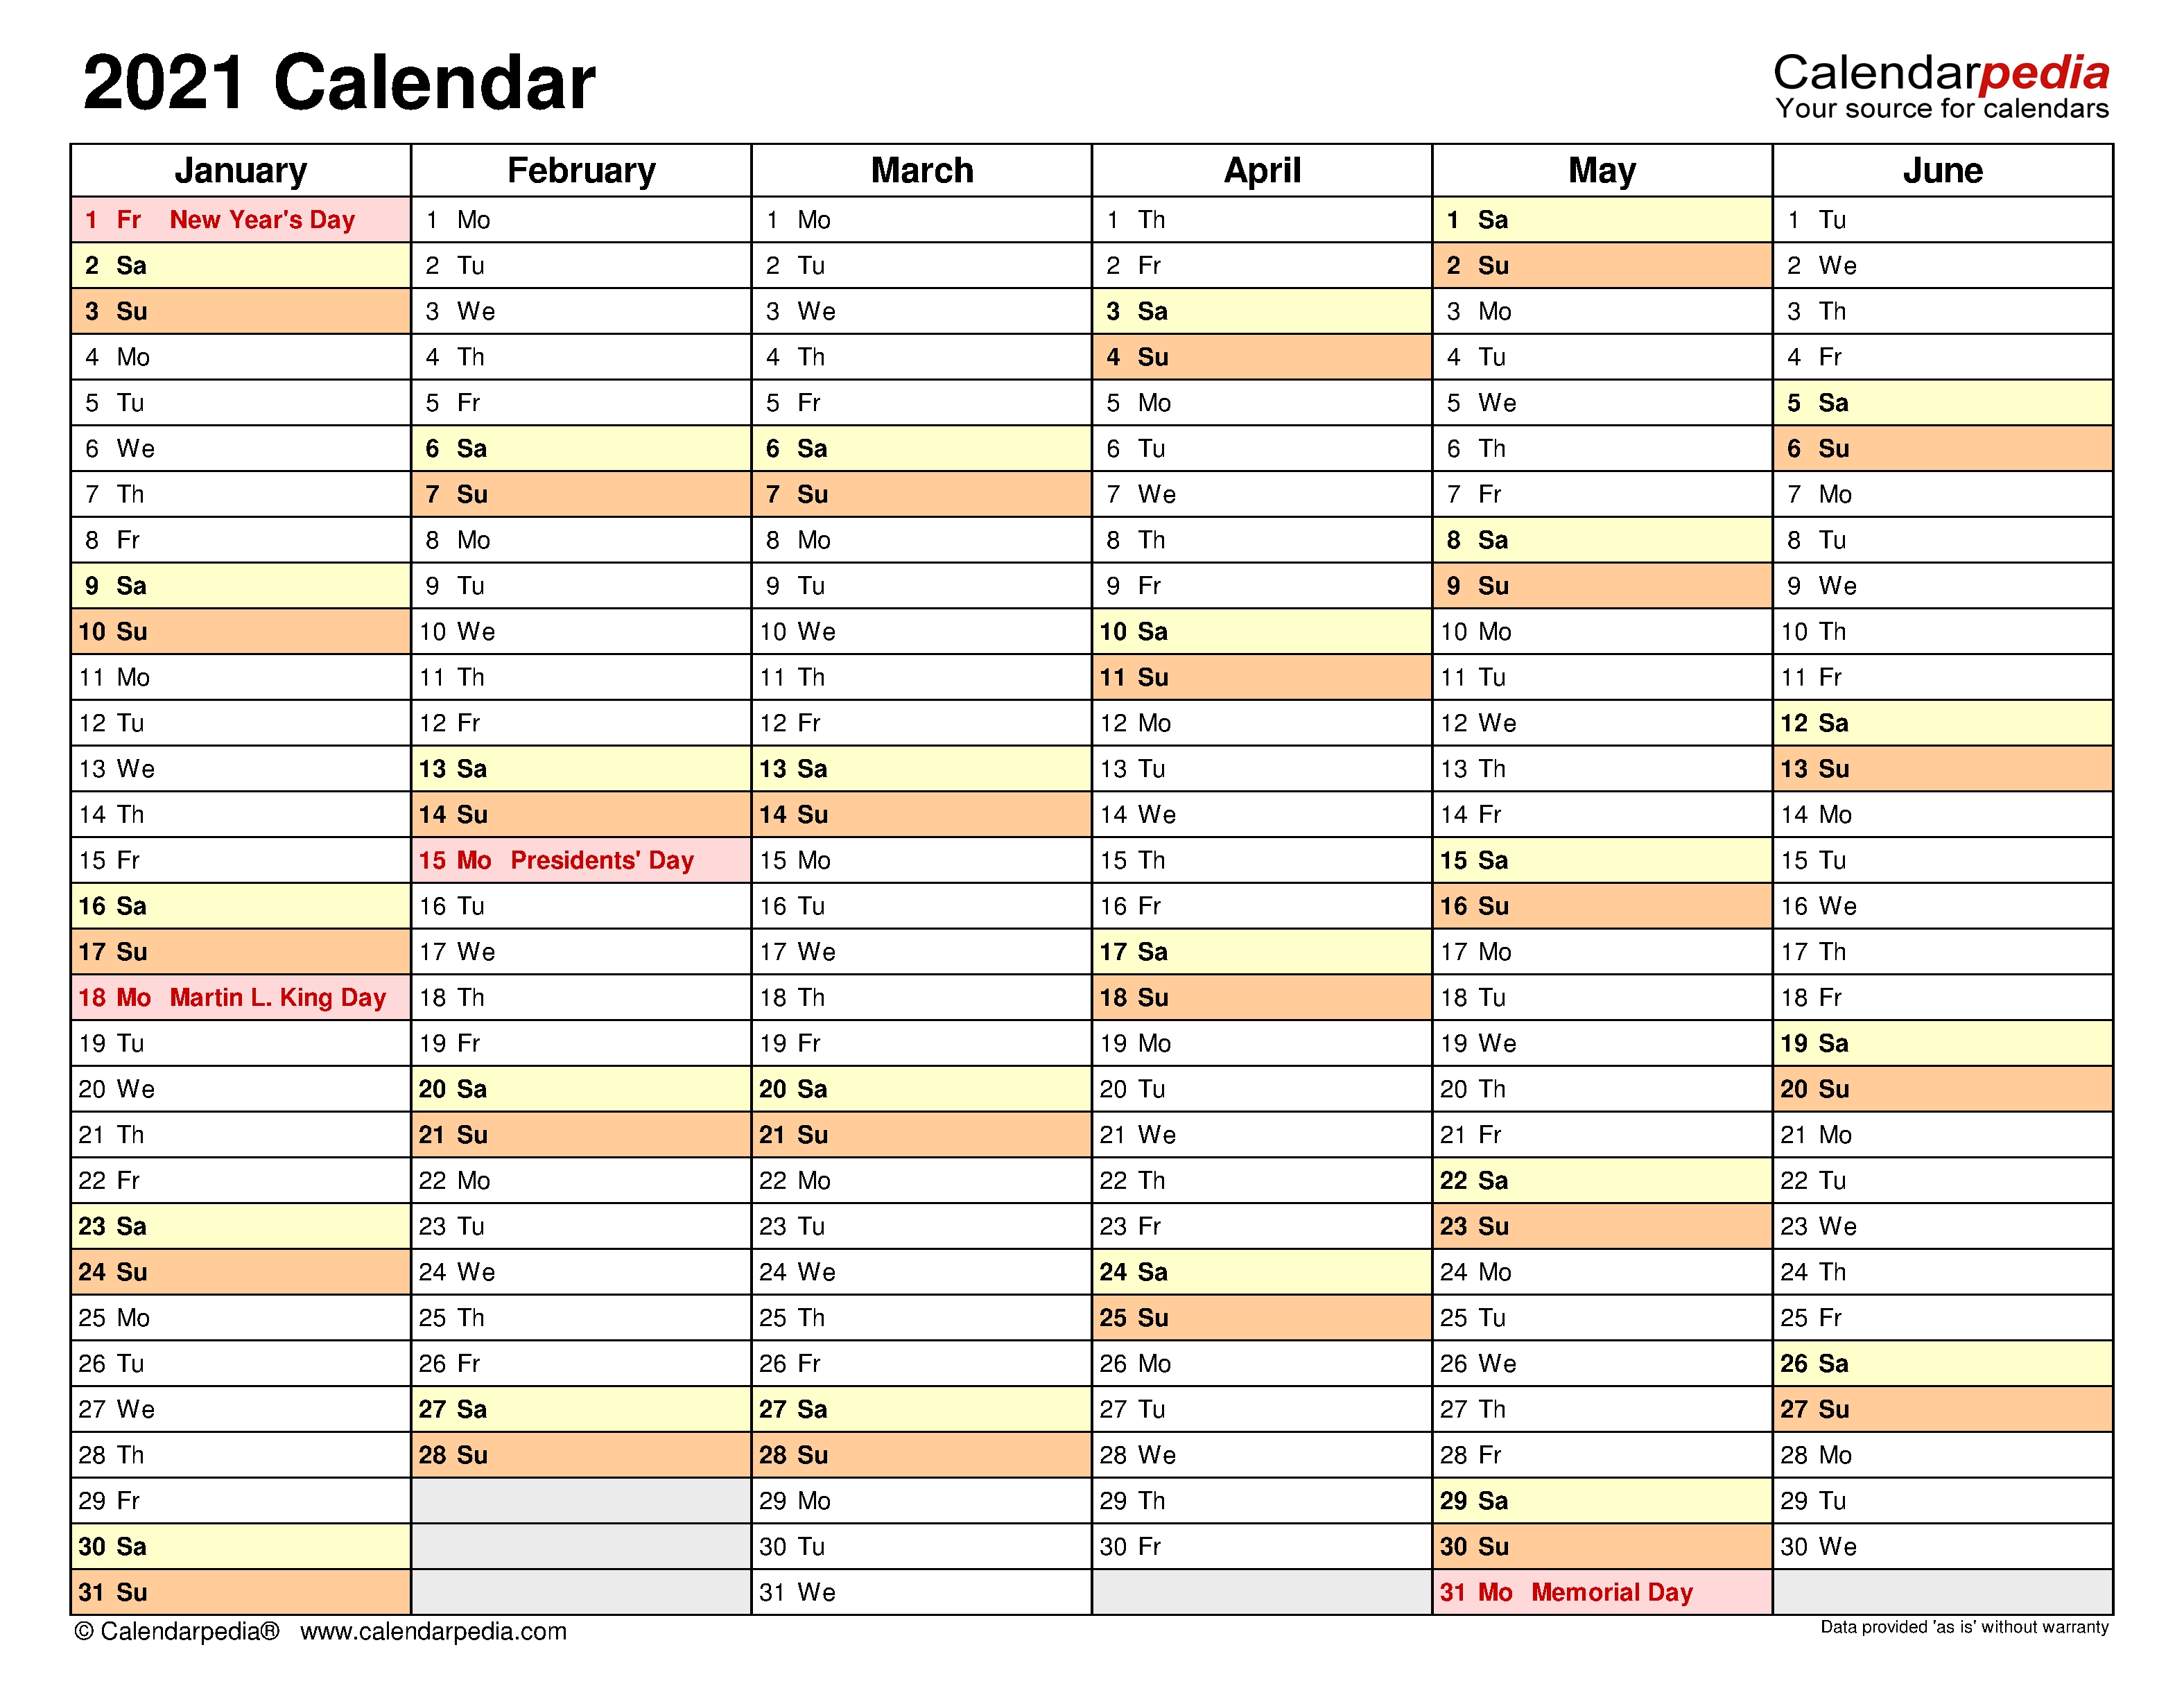 2021 Calendar - Free Printable Excel Templates - Calendarpedia 2021 Calendar In Excel Free